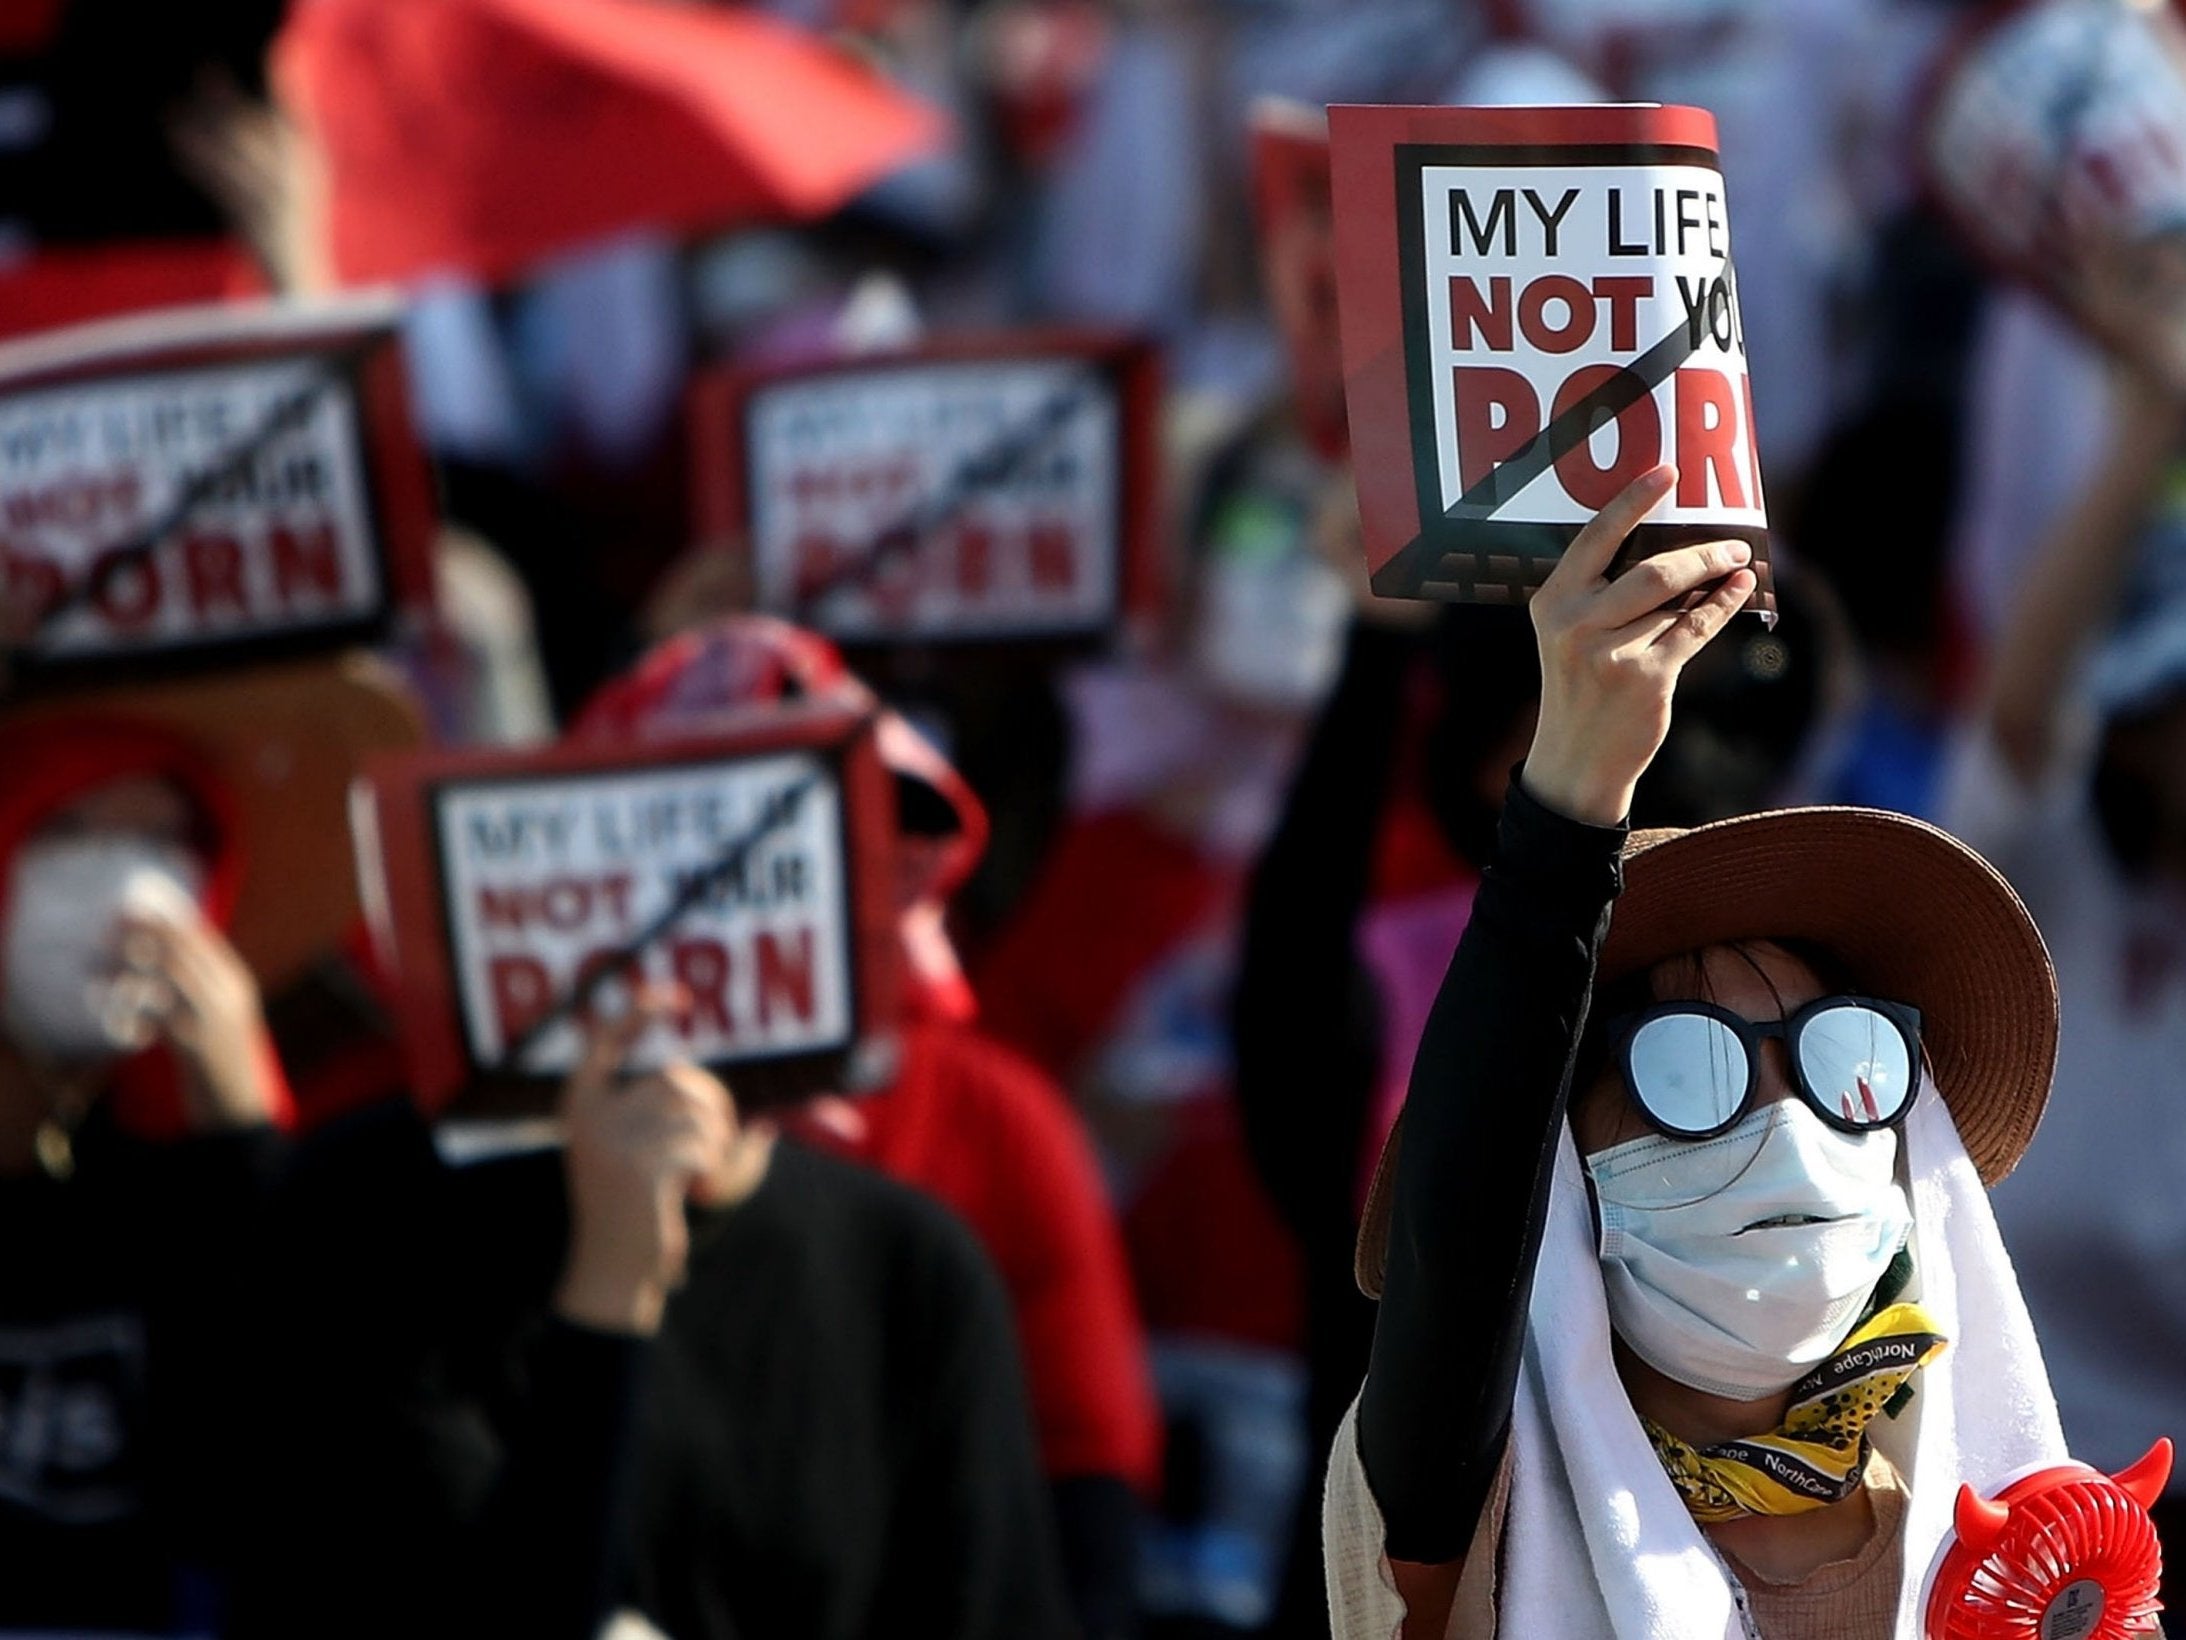 South Korean women protest over "spycam porn" in Seoul